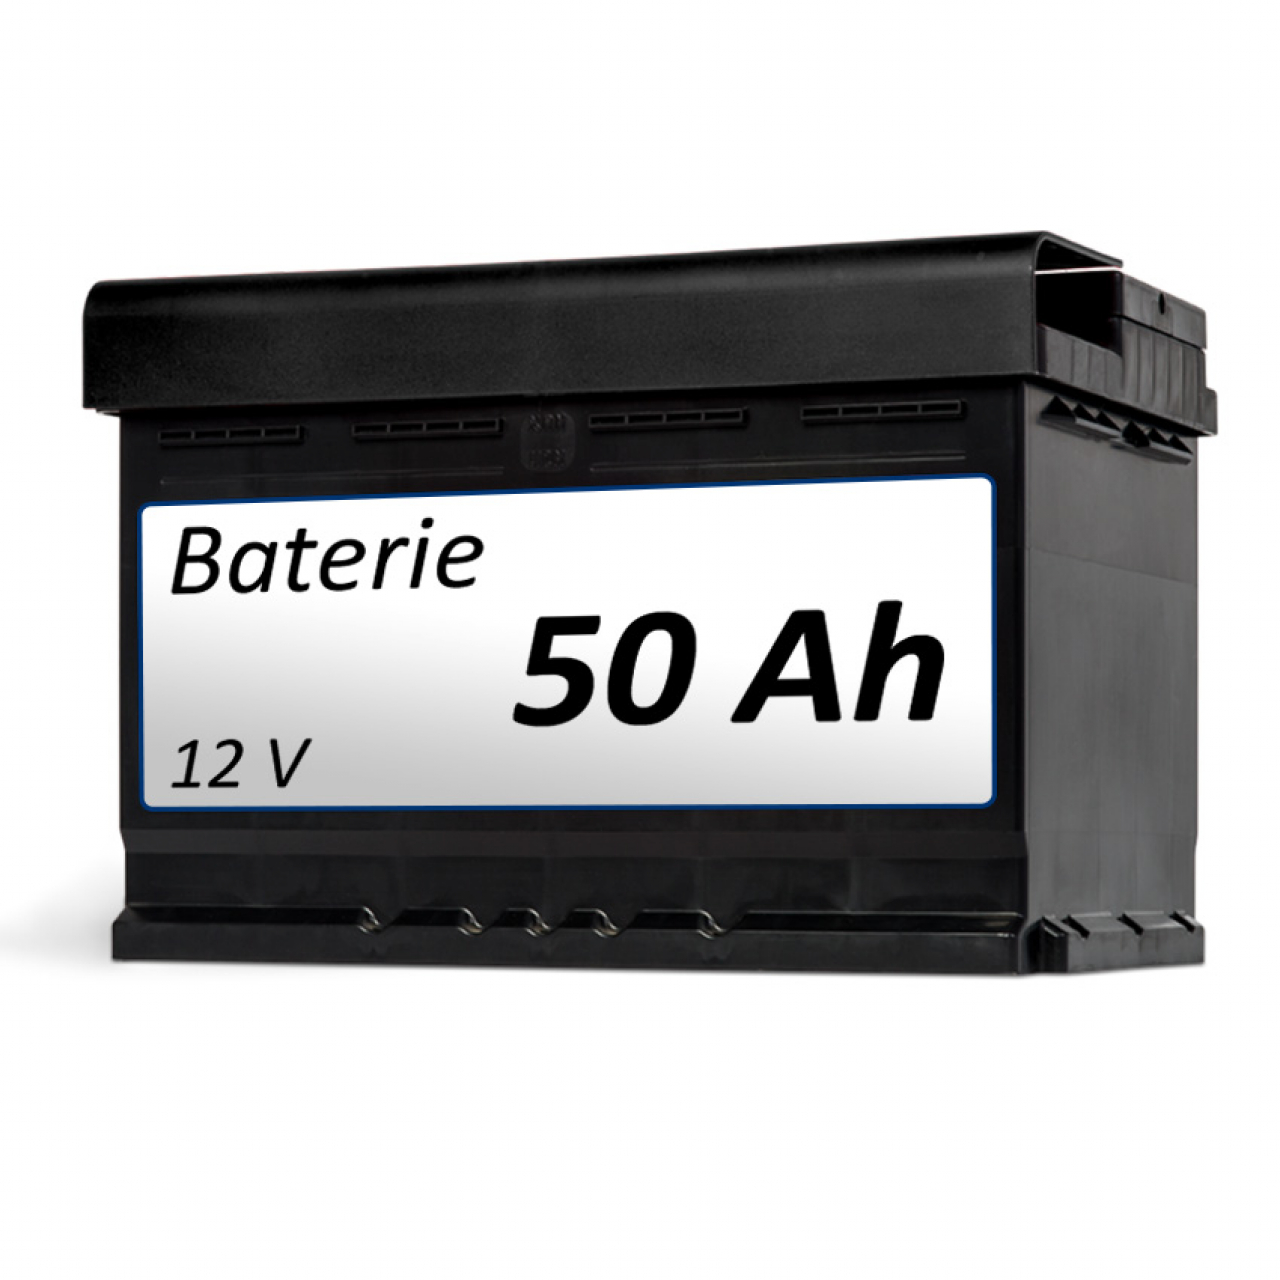 Baterie ke skútru Baterie 50 Ah - k vozíku foto